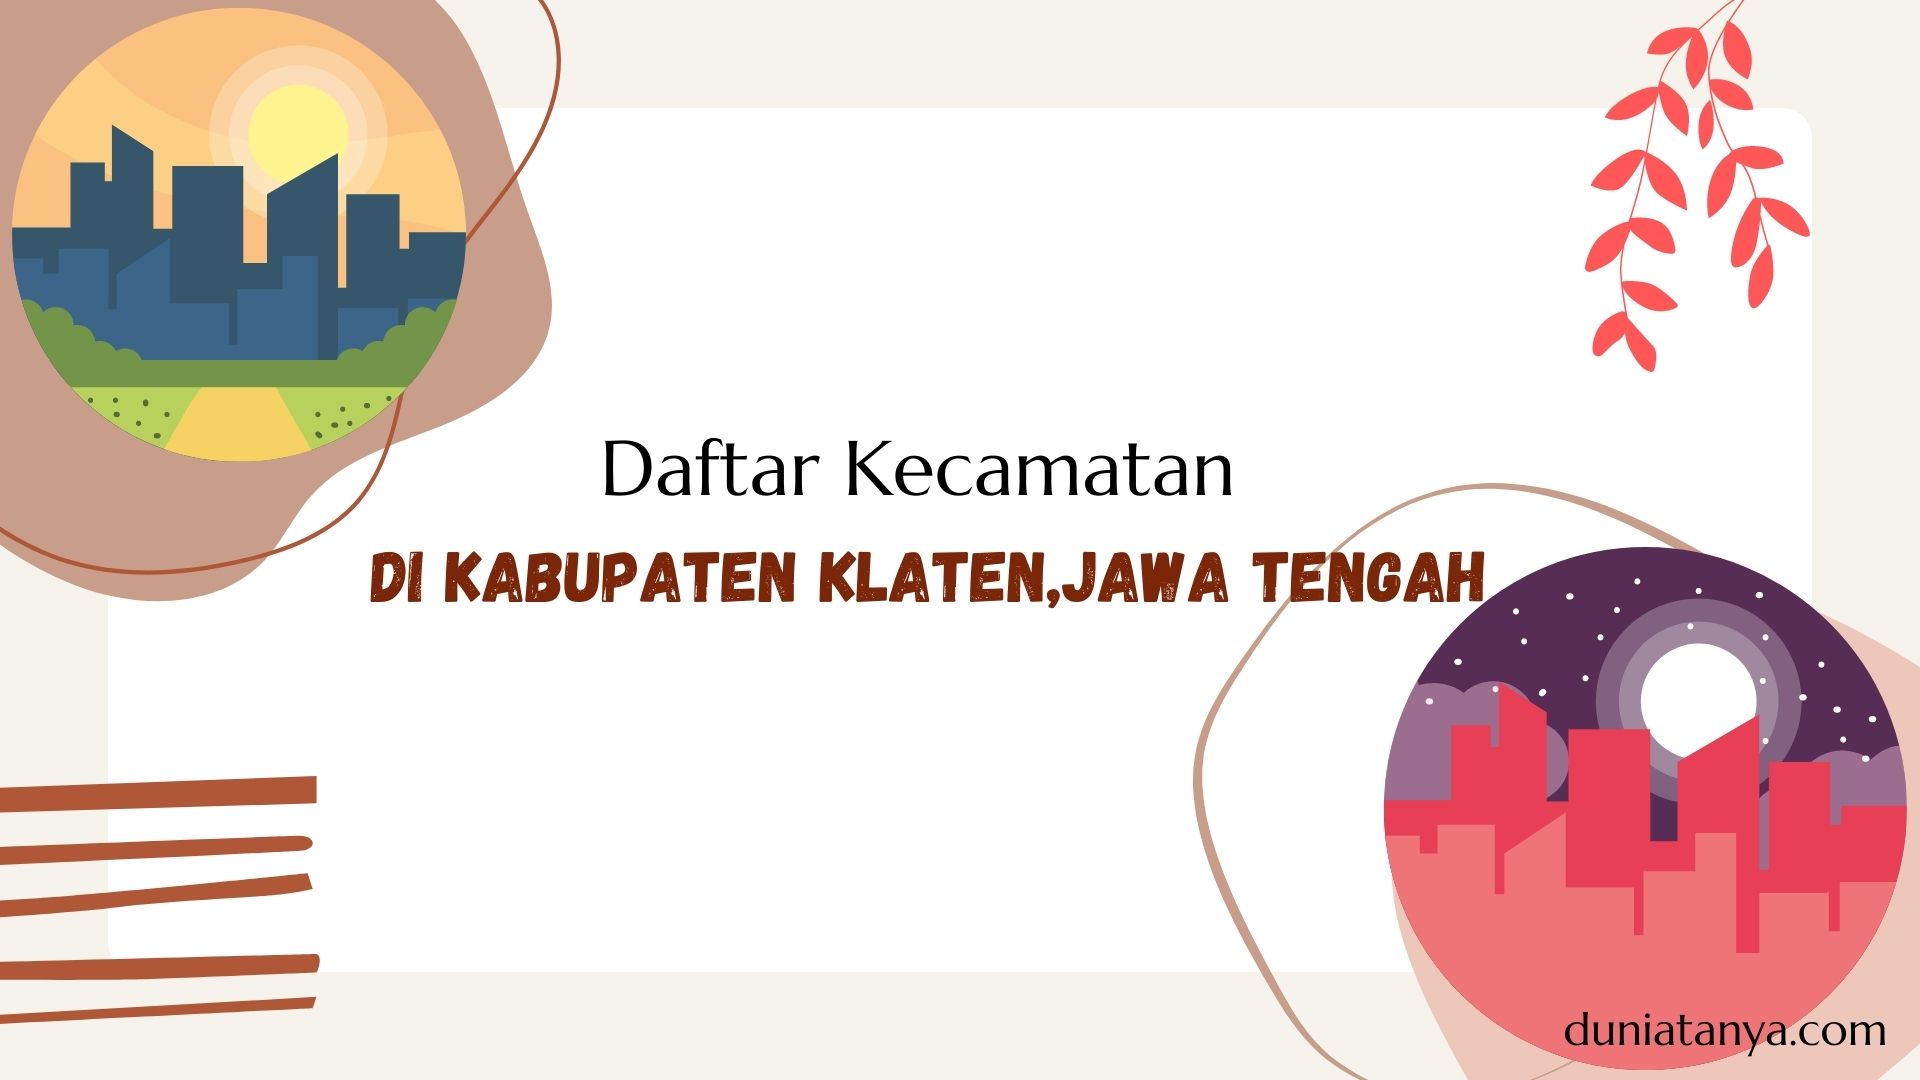 You are currently viewing Daftar Kecamatan Di Kabupaten Klaten,Jawa Tengah